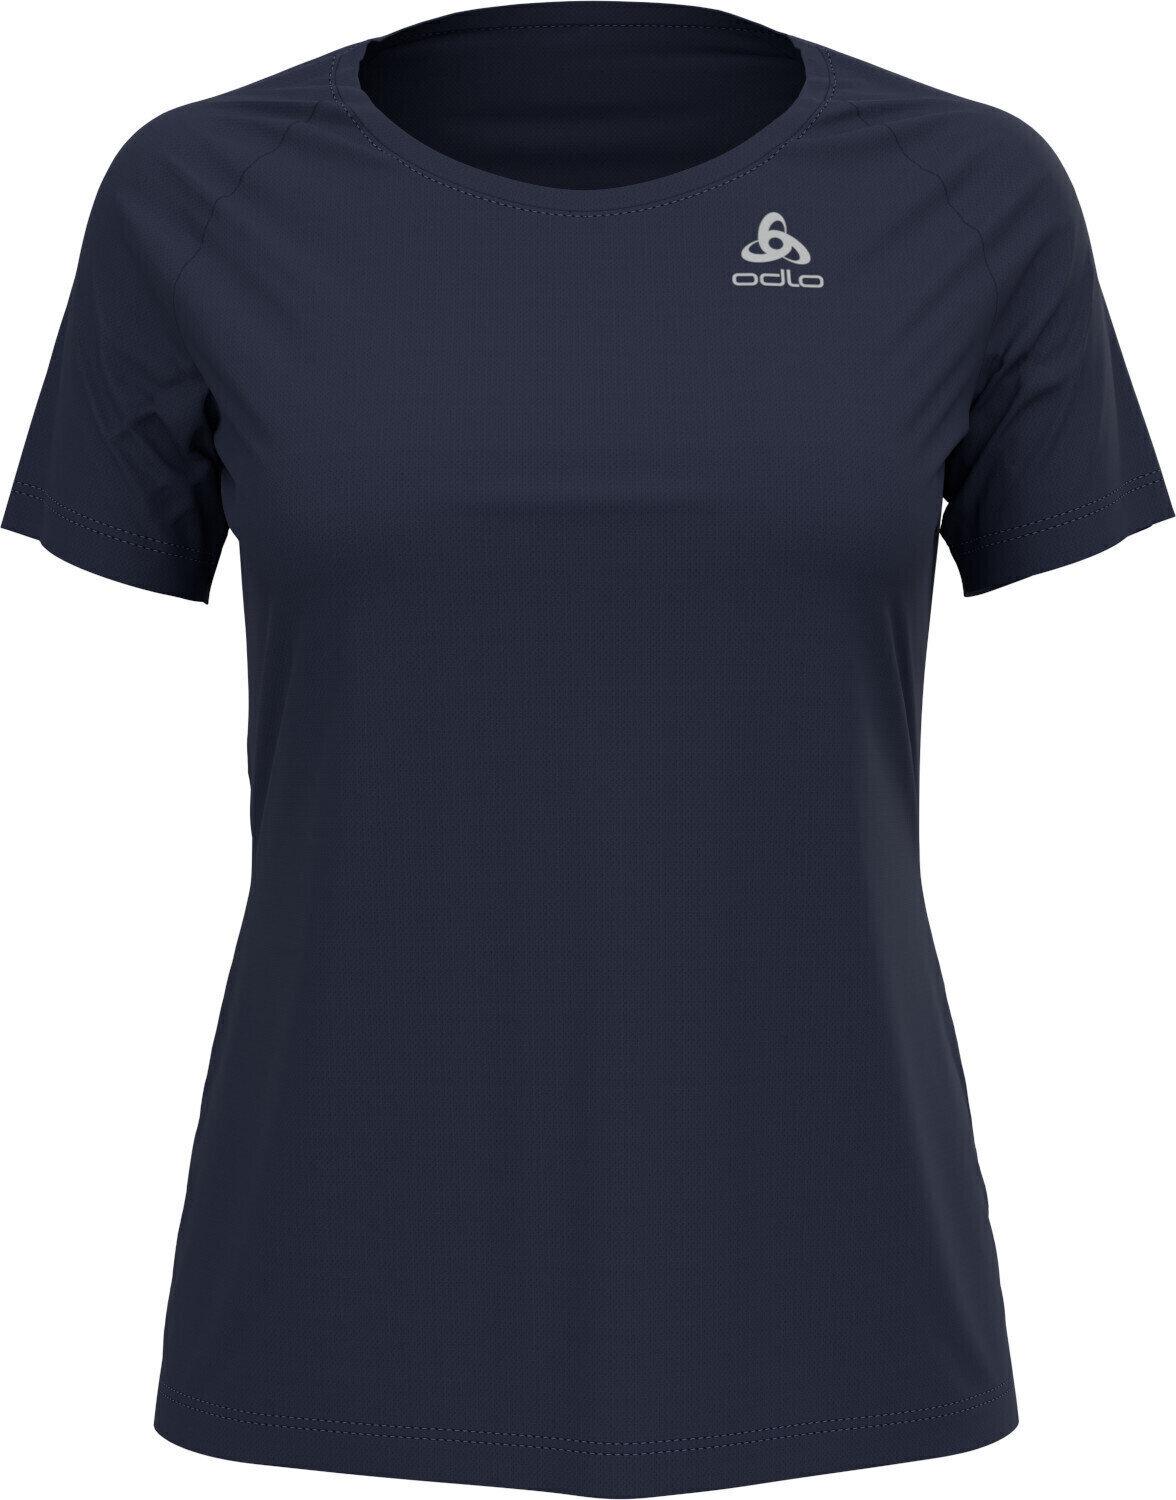 Running t-shirt with short sleeves
 Odlo Element Light T-Shirt Diving Navy XS Running t-shirt with short sleeves